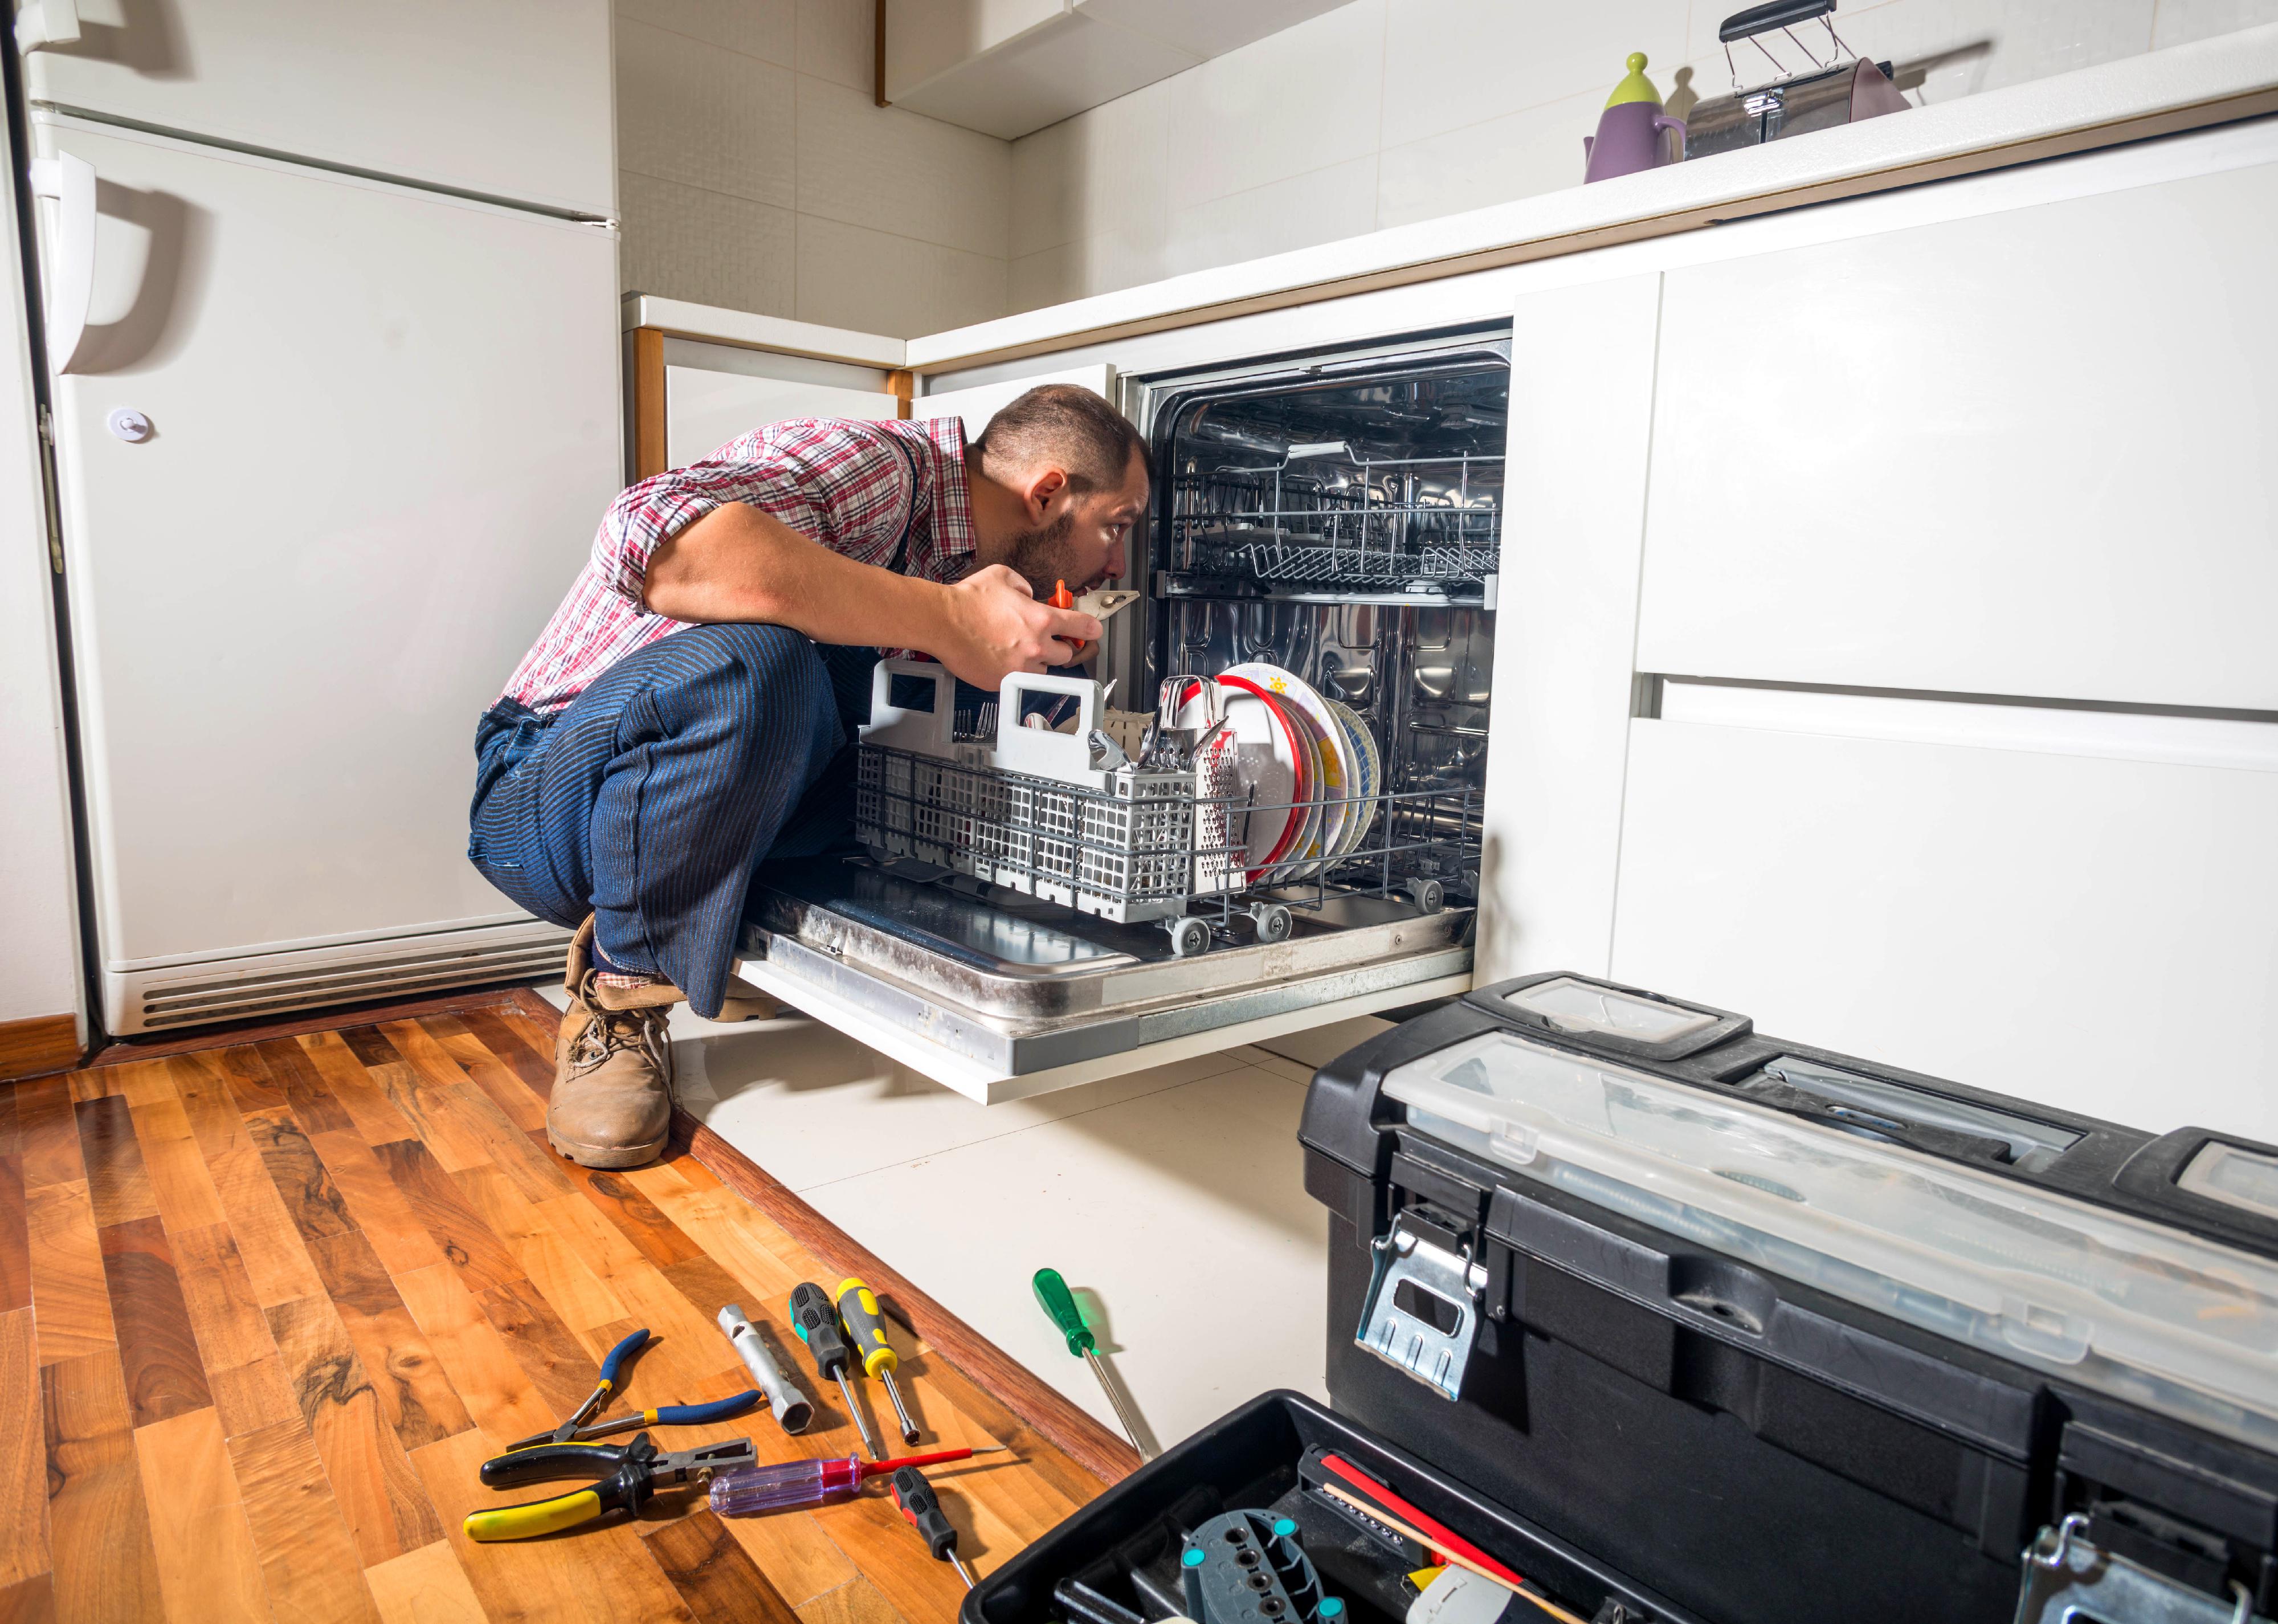 A man repairs a dishwasher in a kitchen 